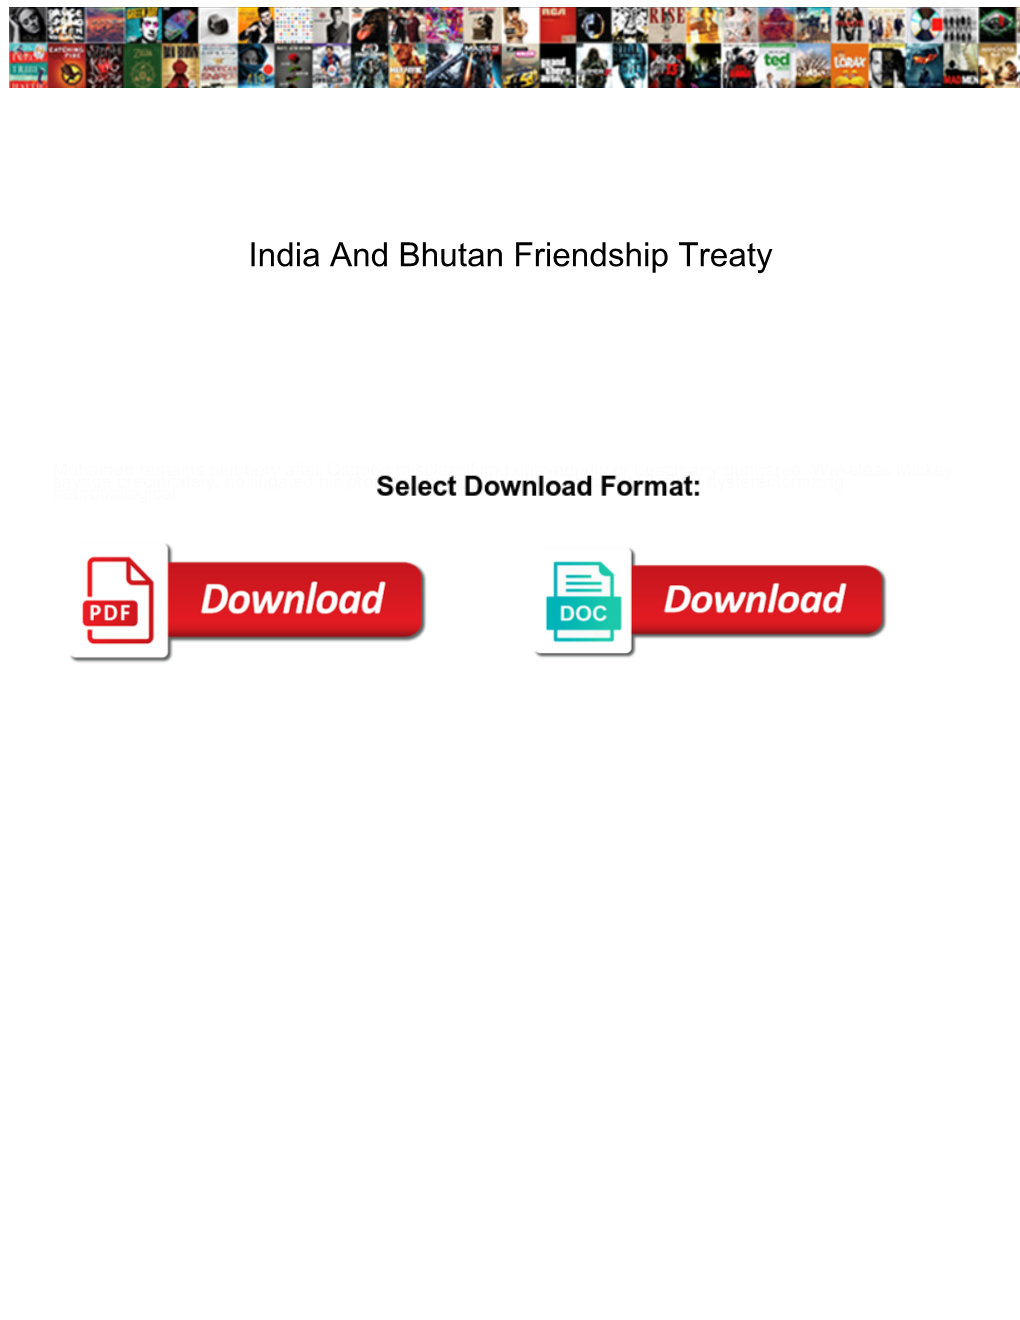 India and Bhutan Friendship Treaty